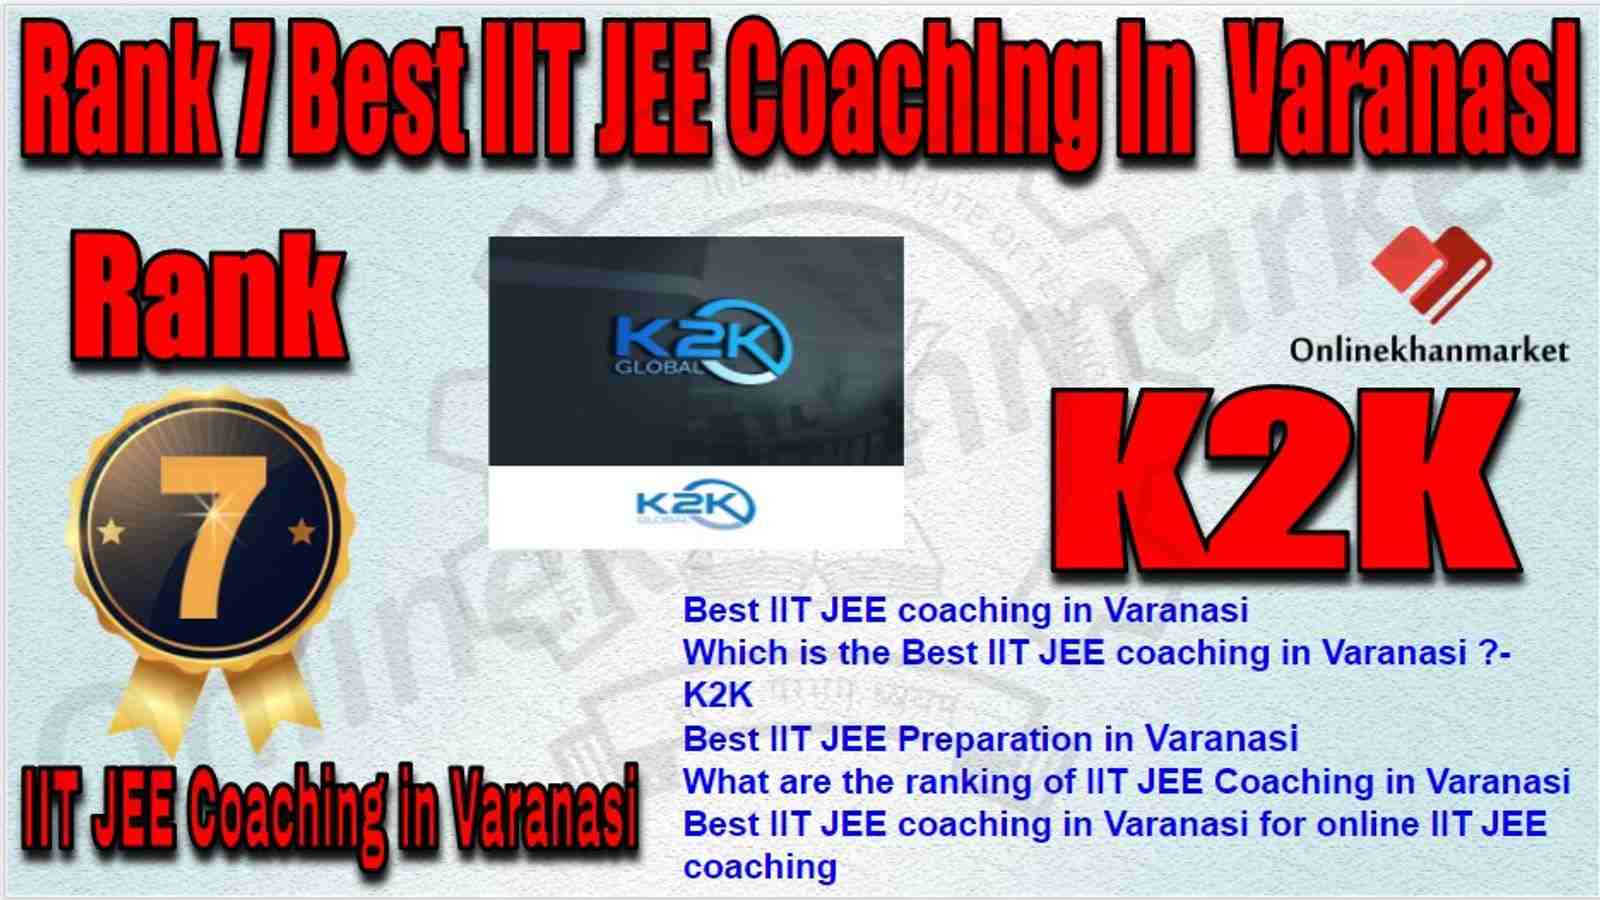 RANK 7 BEST IIT JEE Coaching in varanasi